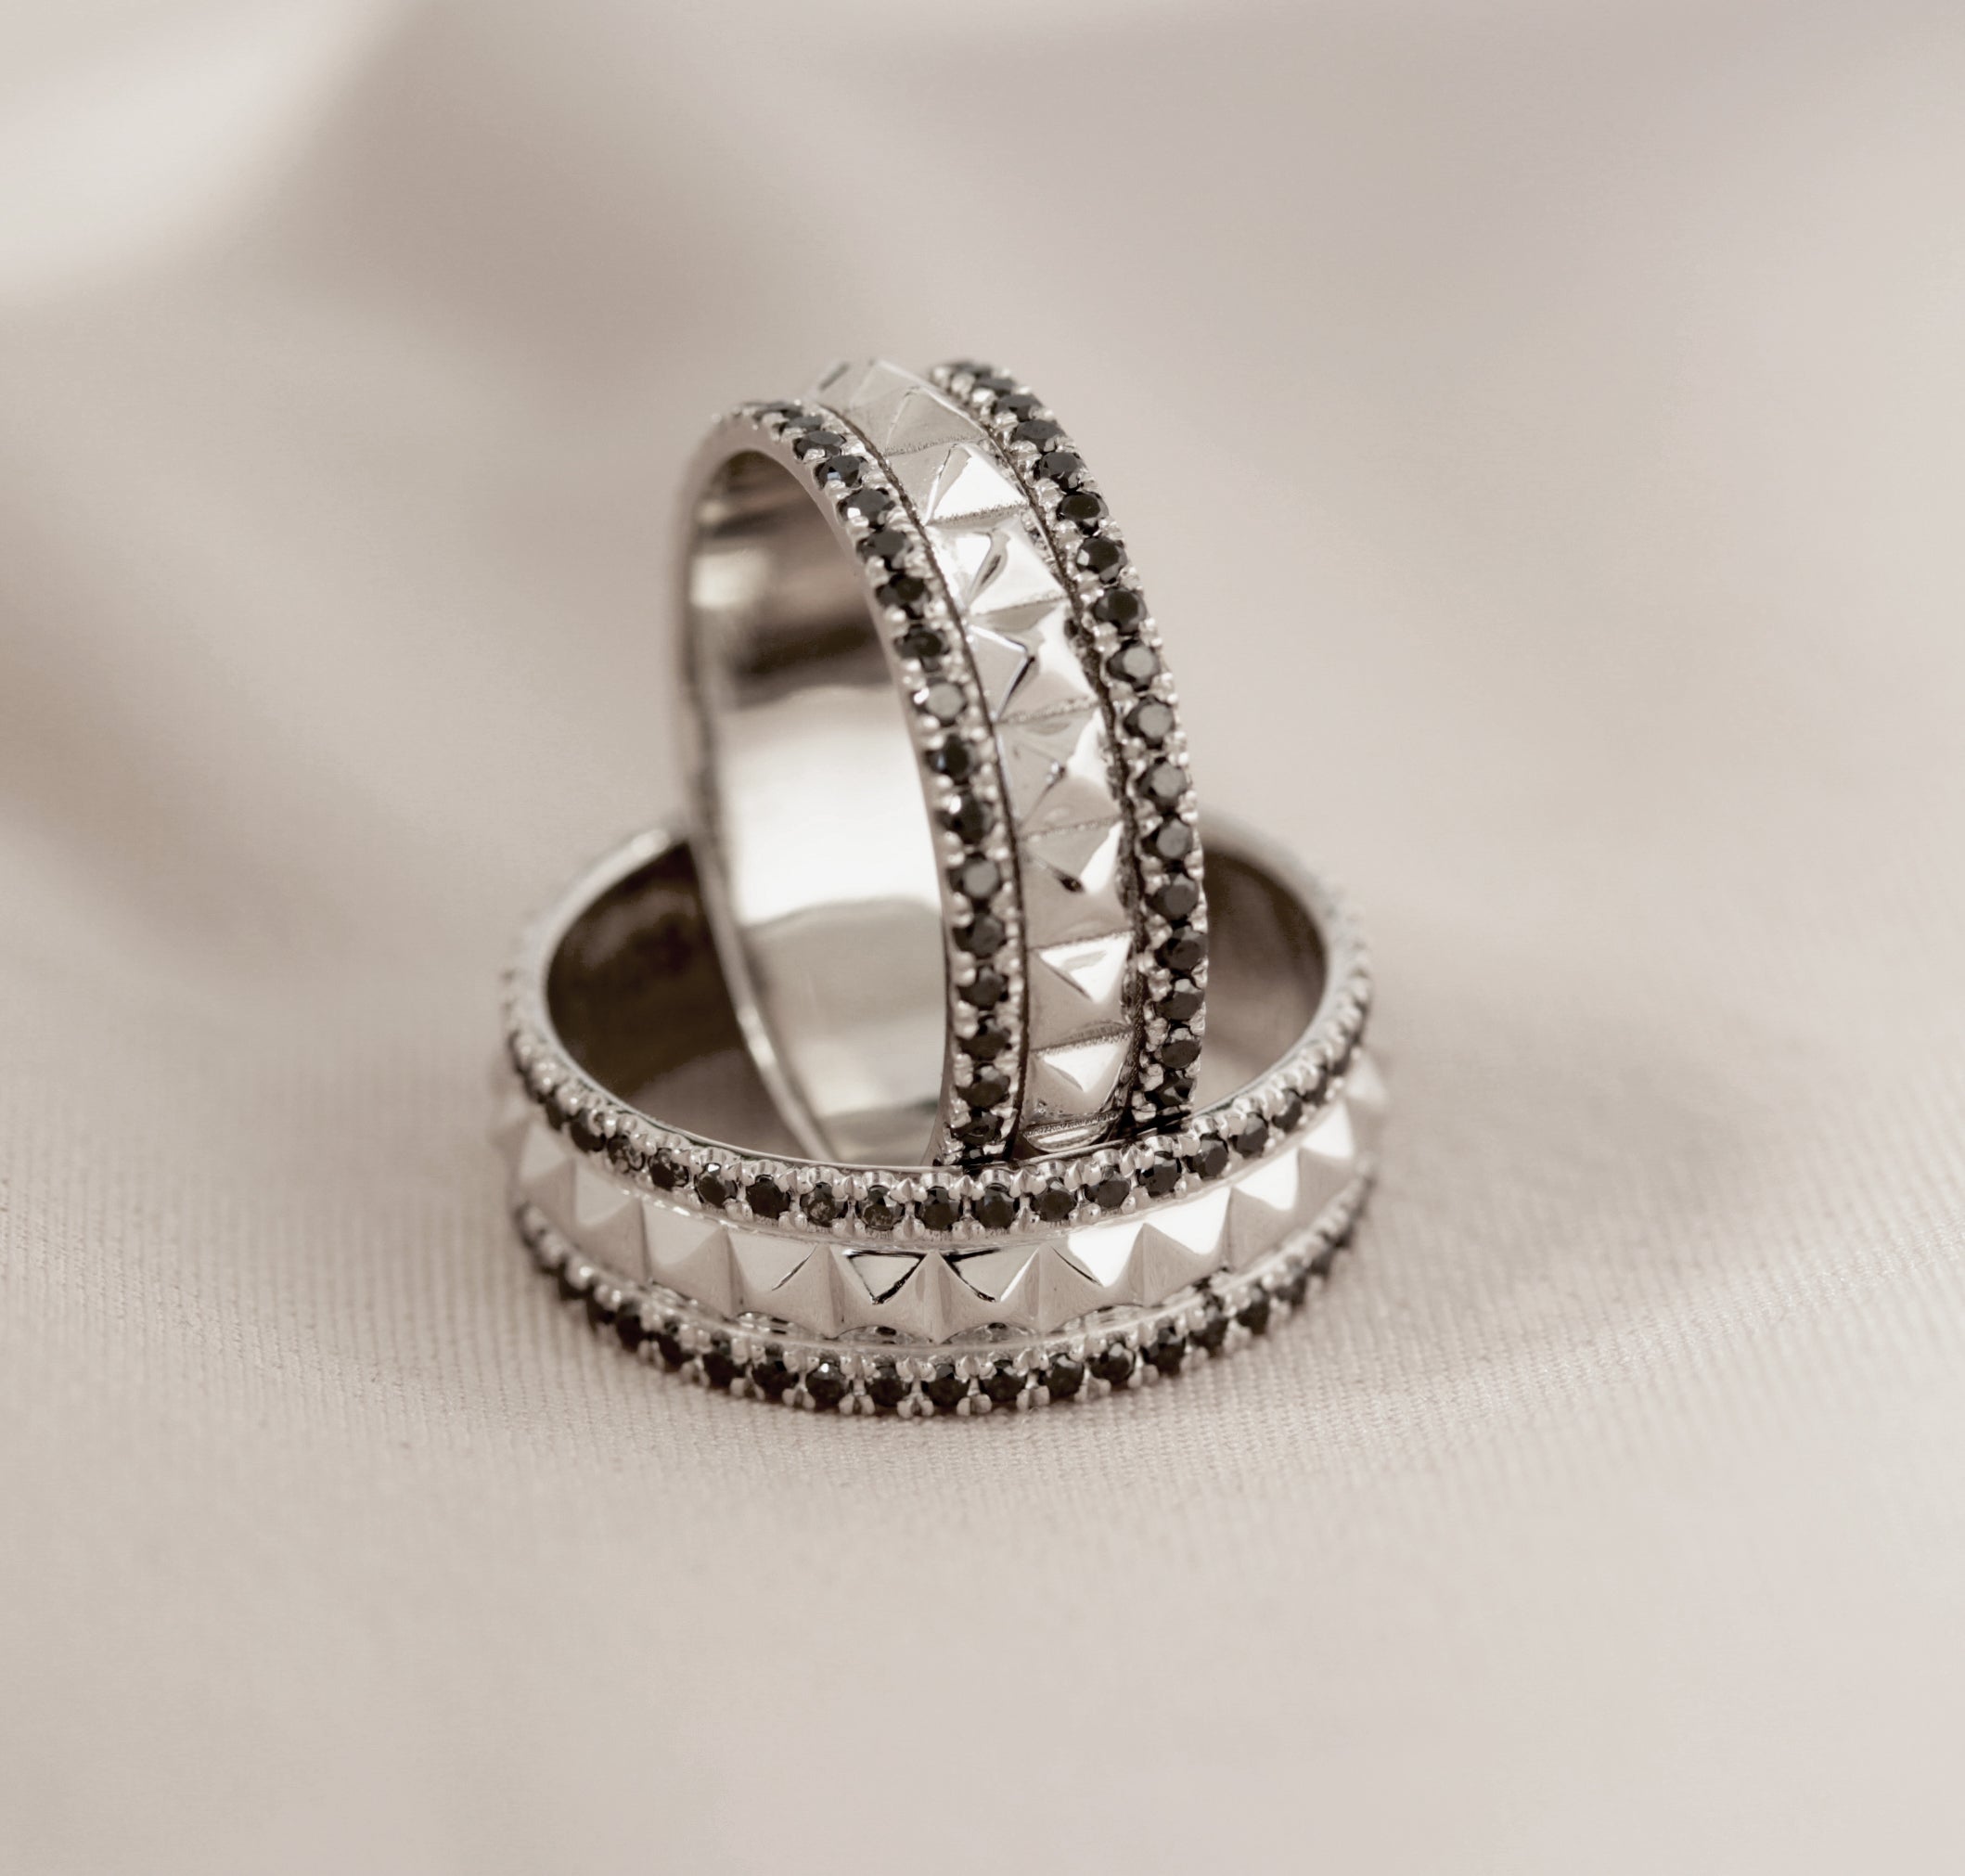 Double black diamonds eternity pyramid wedding ring, 14K White Gold, Size 5.5, READY TO SHIP! ♥